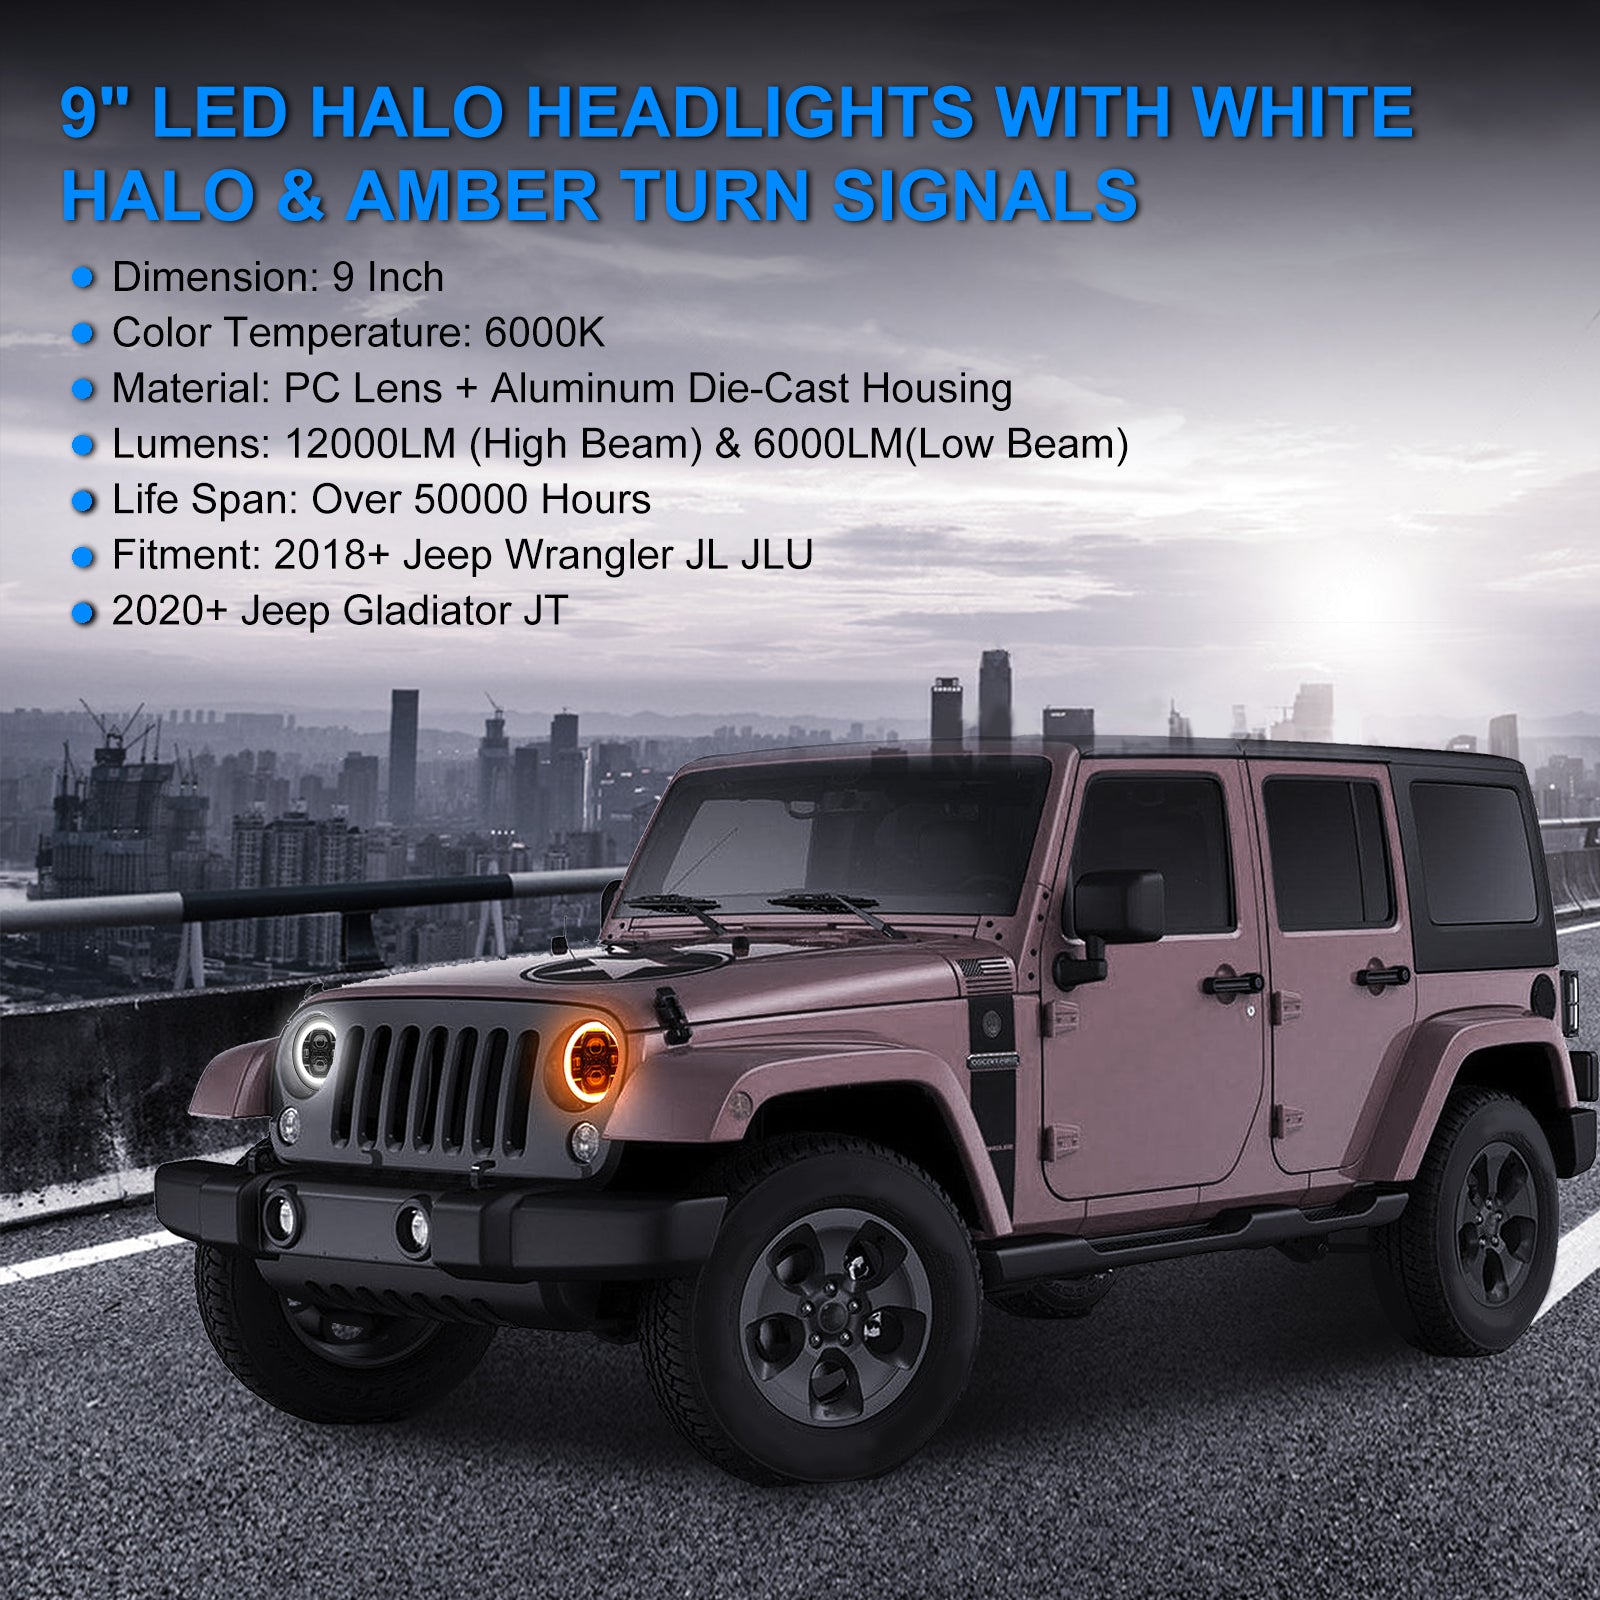 Jeep Gladiator Halo Headlights Specification